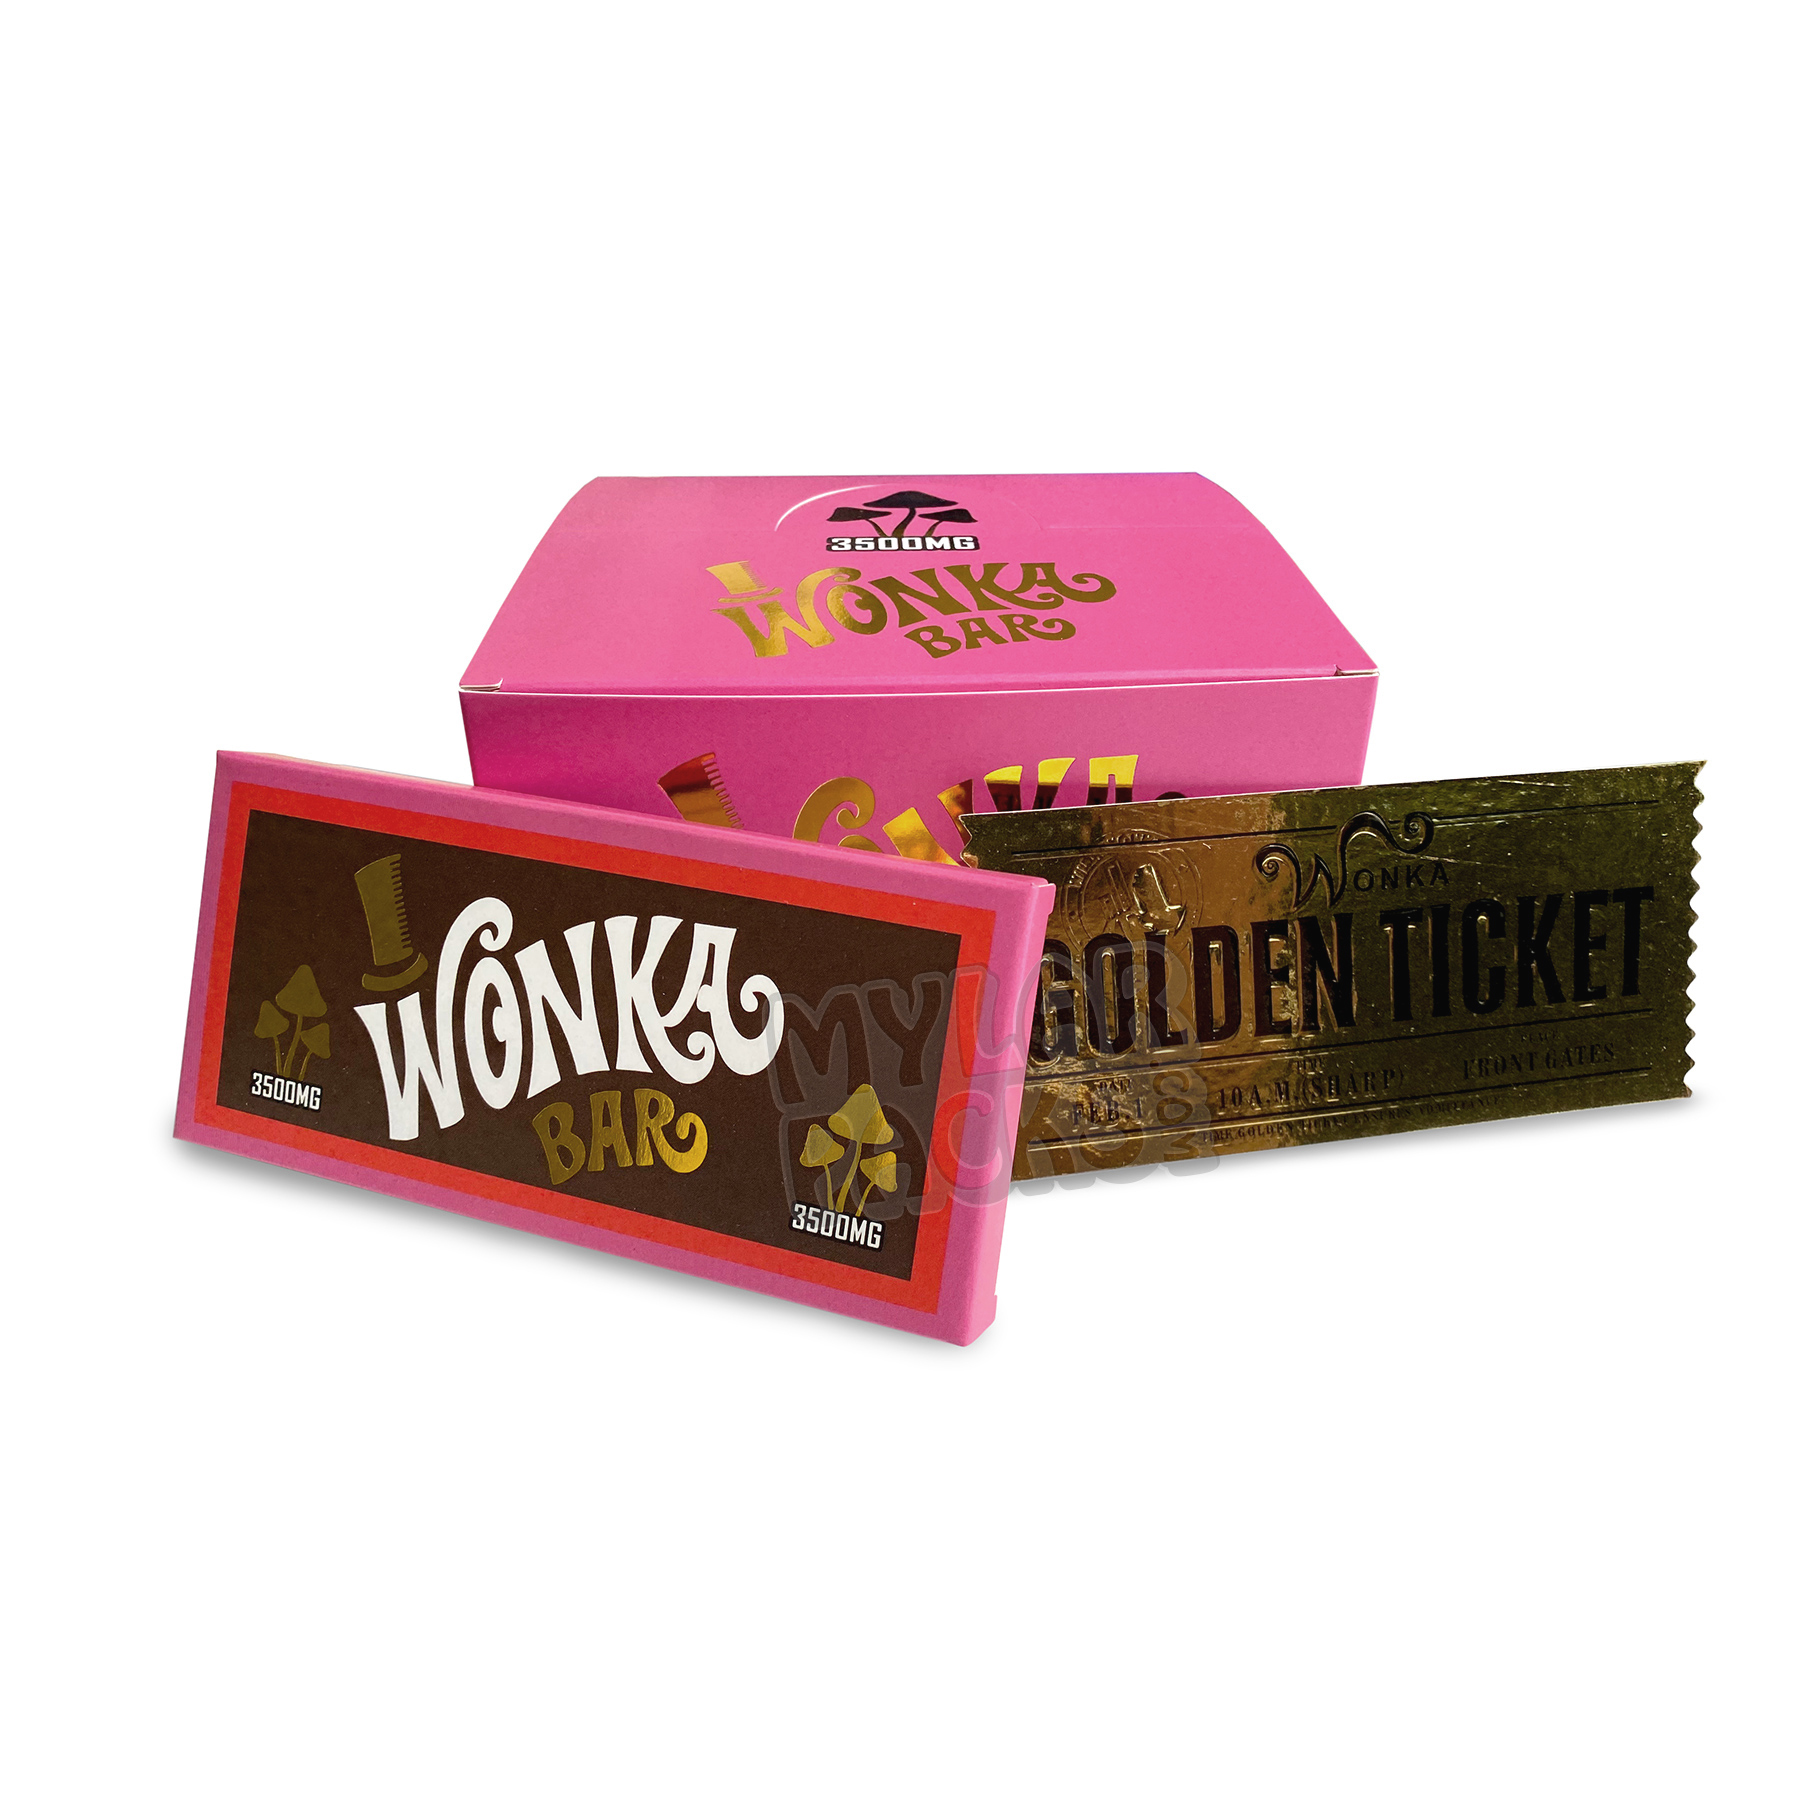 Wonka Mushroom Bar Packaging, Empty Chocolate Bar Box